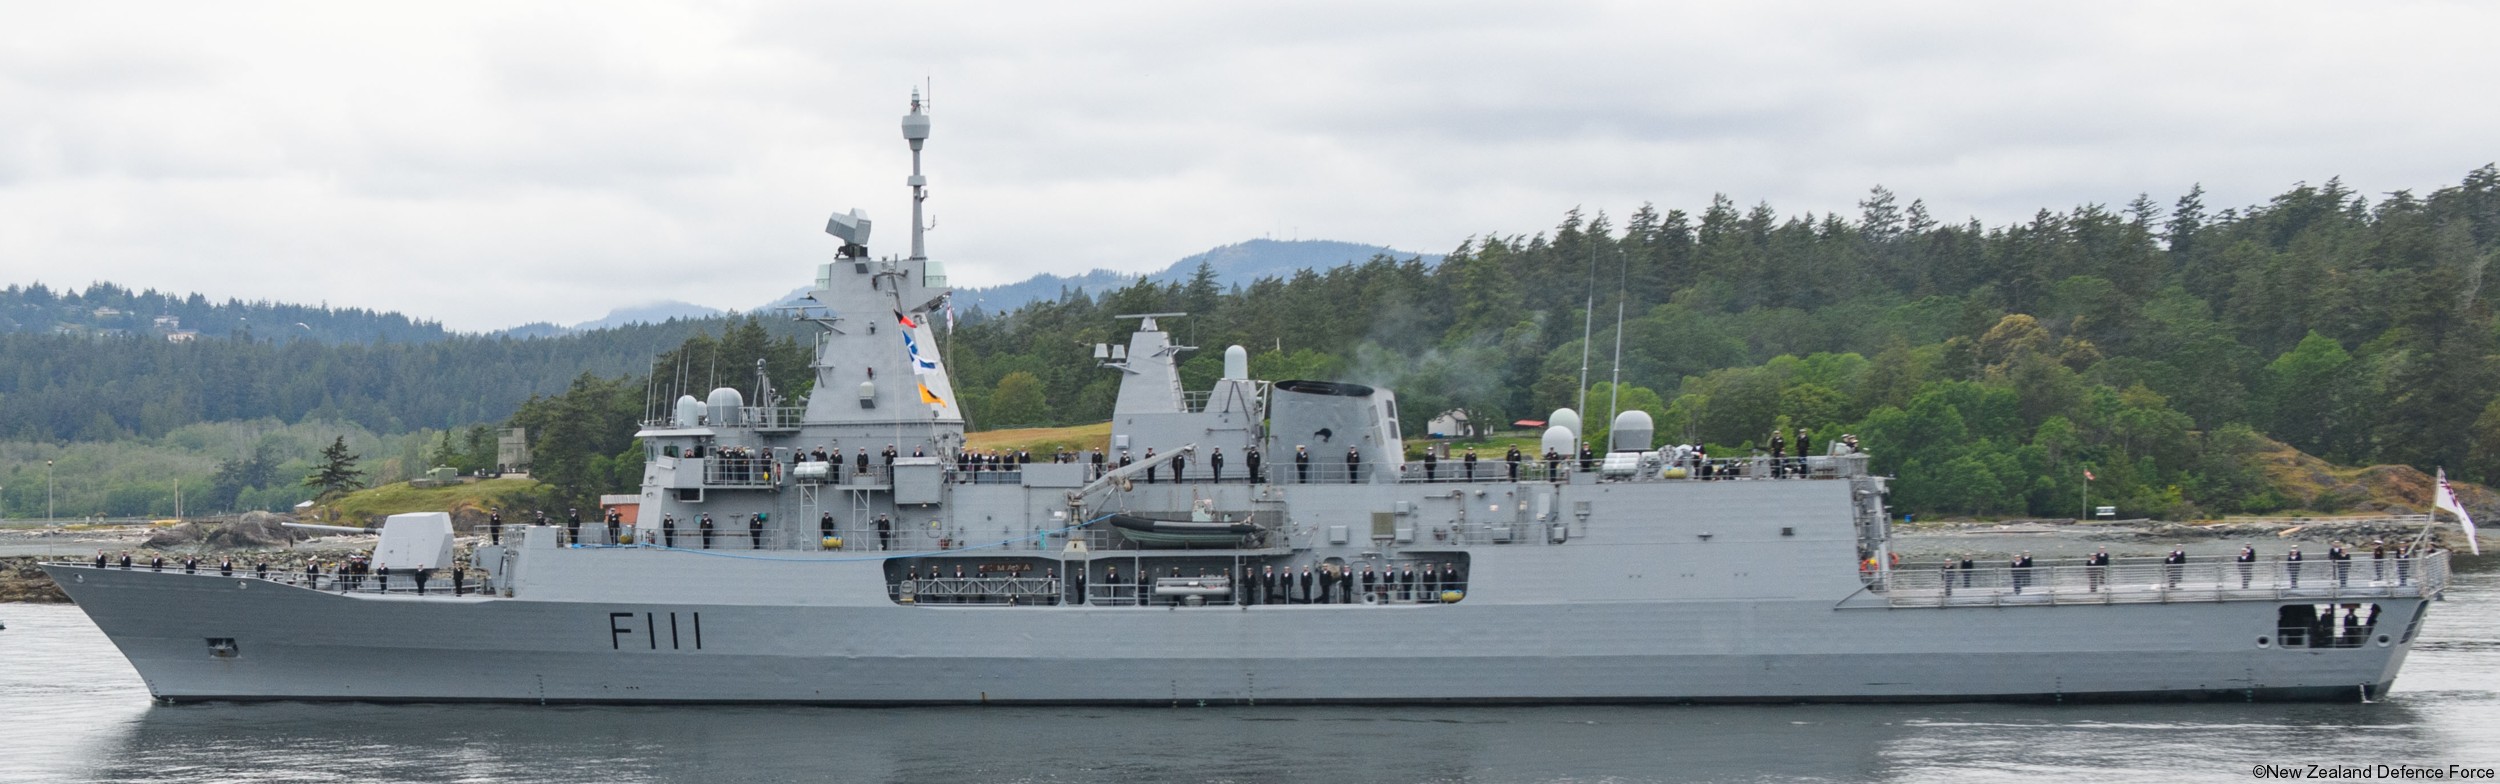 f-111 hmnzs te mana anzac class frigate royal new zealand navy rnzn 32